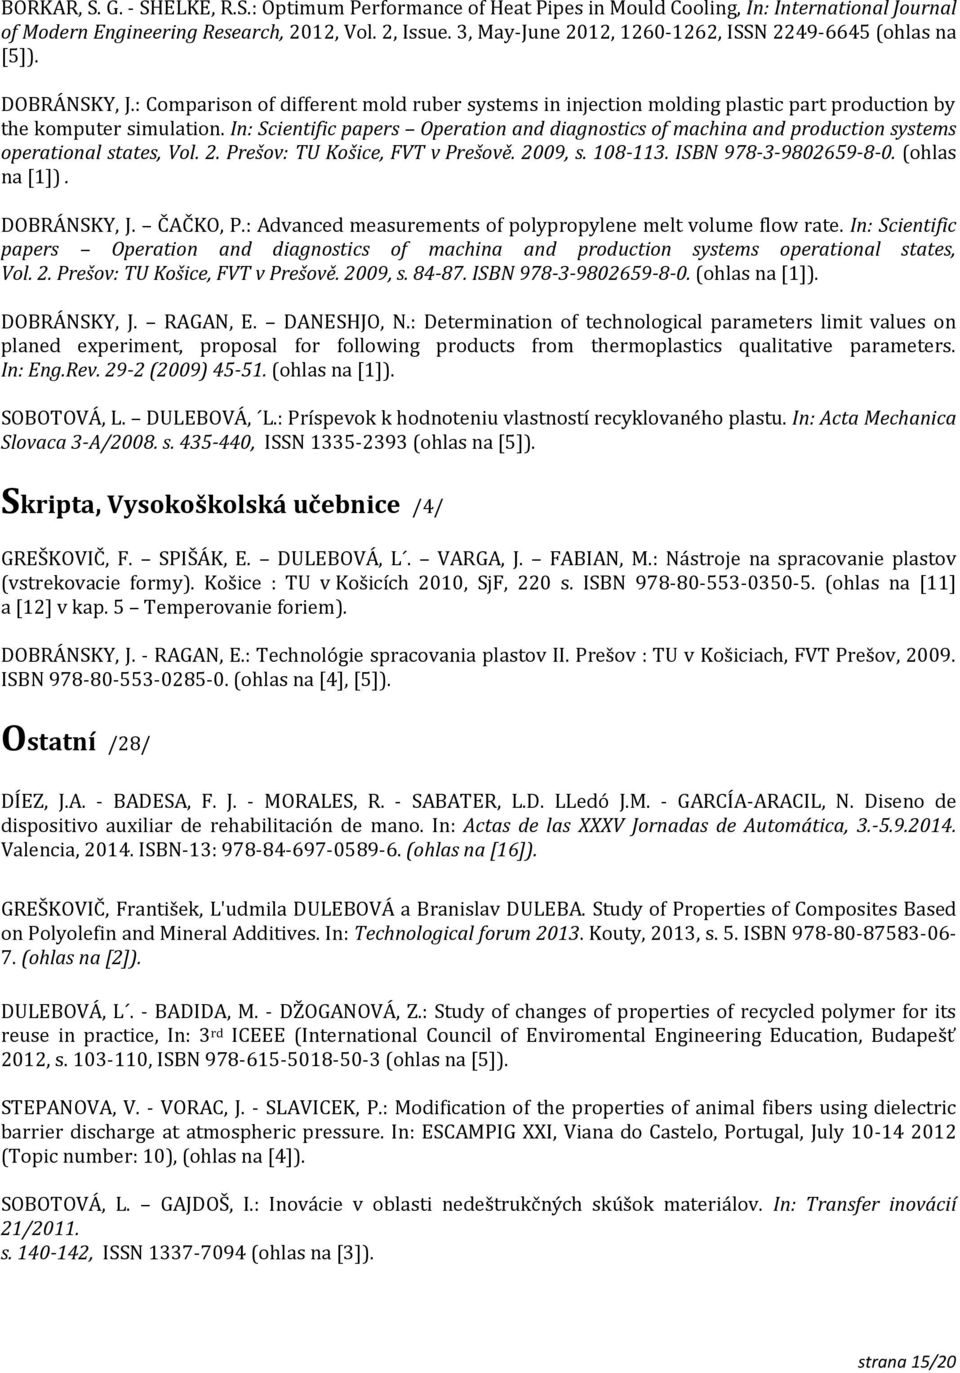 In: Scientific papers Operation and diagnostics of machina and production systems operational states, Vol. 2. Prešov: TU Košice, FVT v Prešově. 2009, s. 108-113. ISBN 978-3-9802659-8-0.